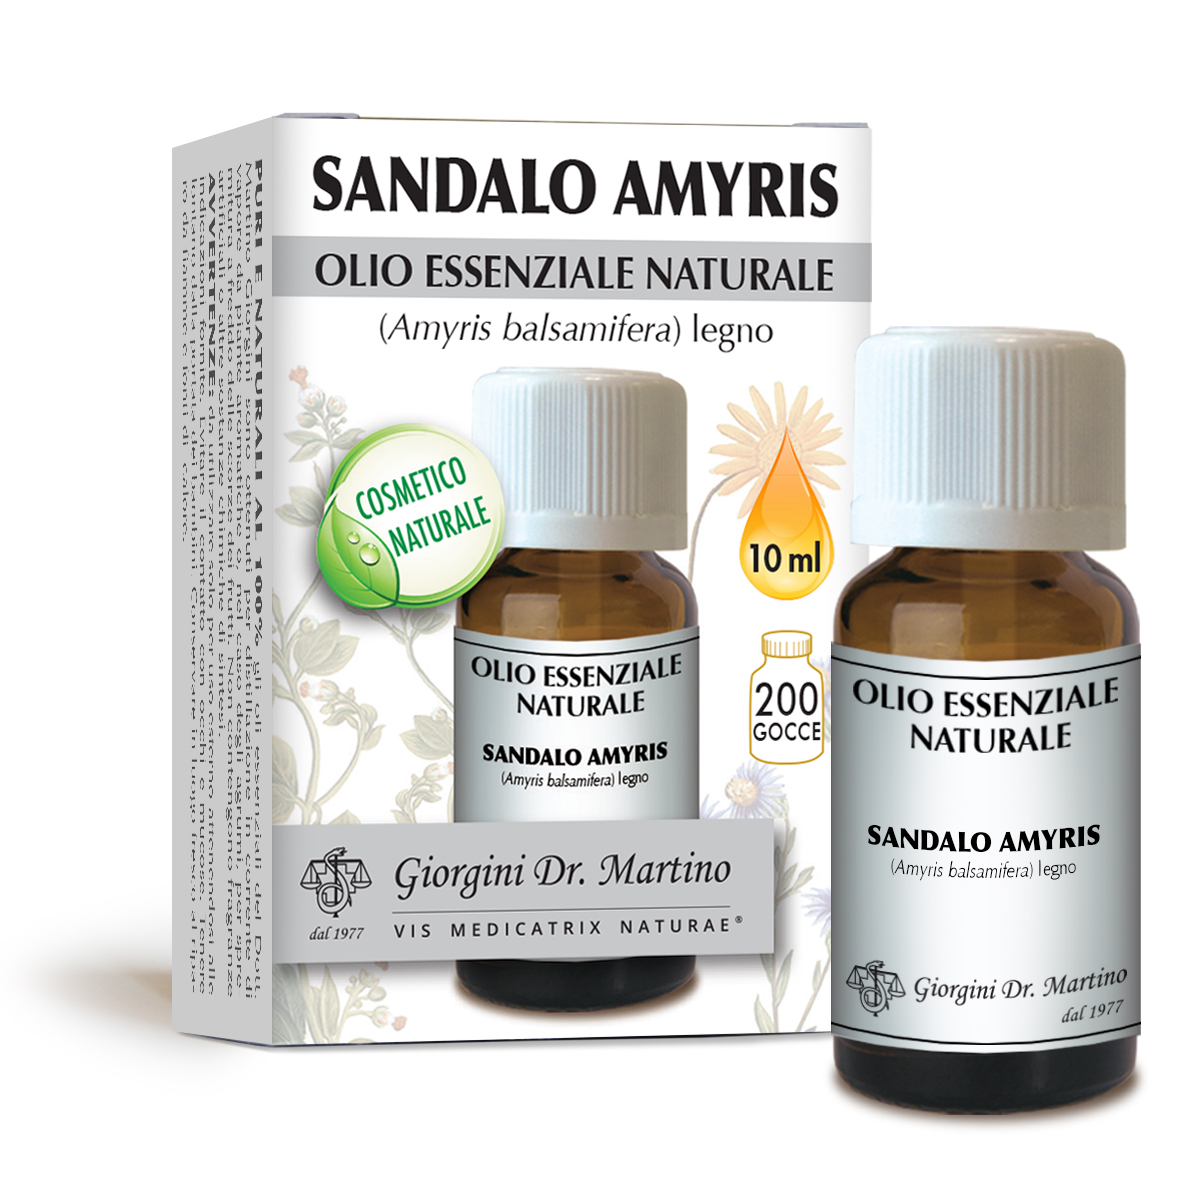 SANDALO AMYRIS olio essenzialenaturale 10 ml